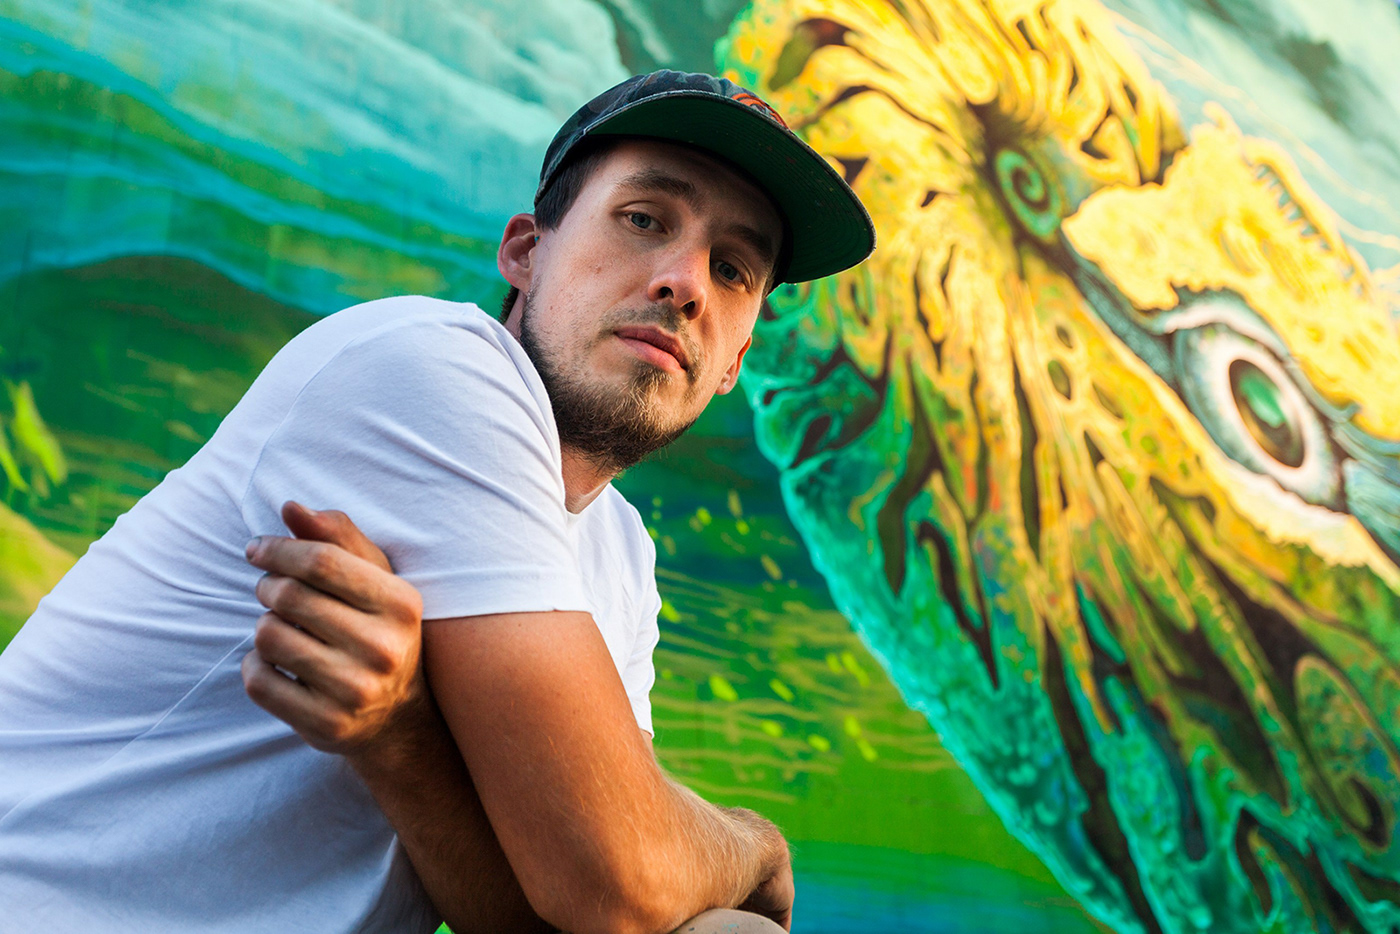 Mural Muralist artist streetart art nautilus sea Graffiti artwork beststreetart